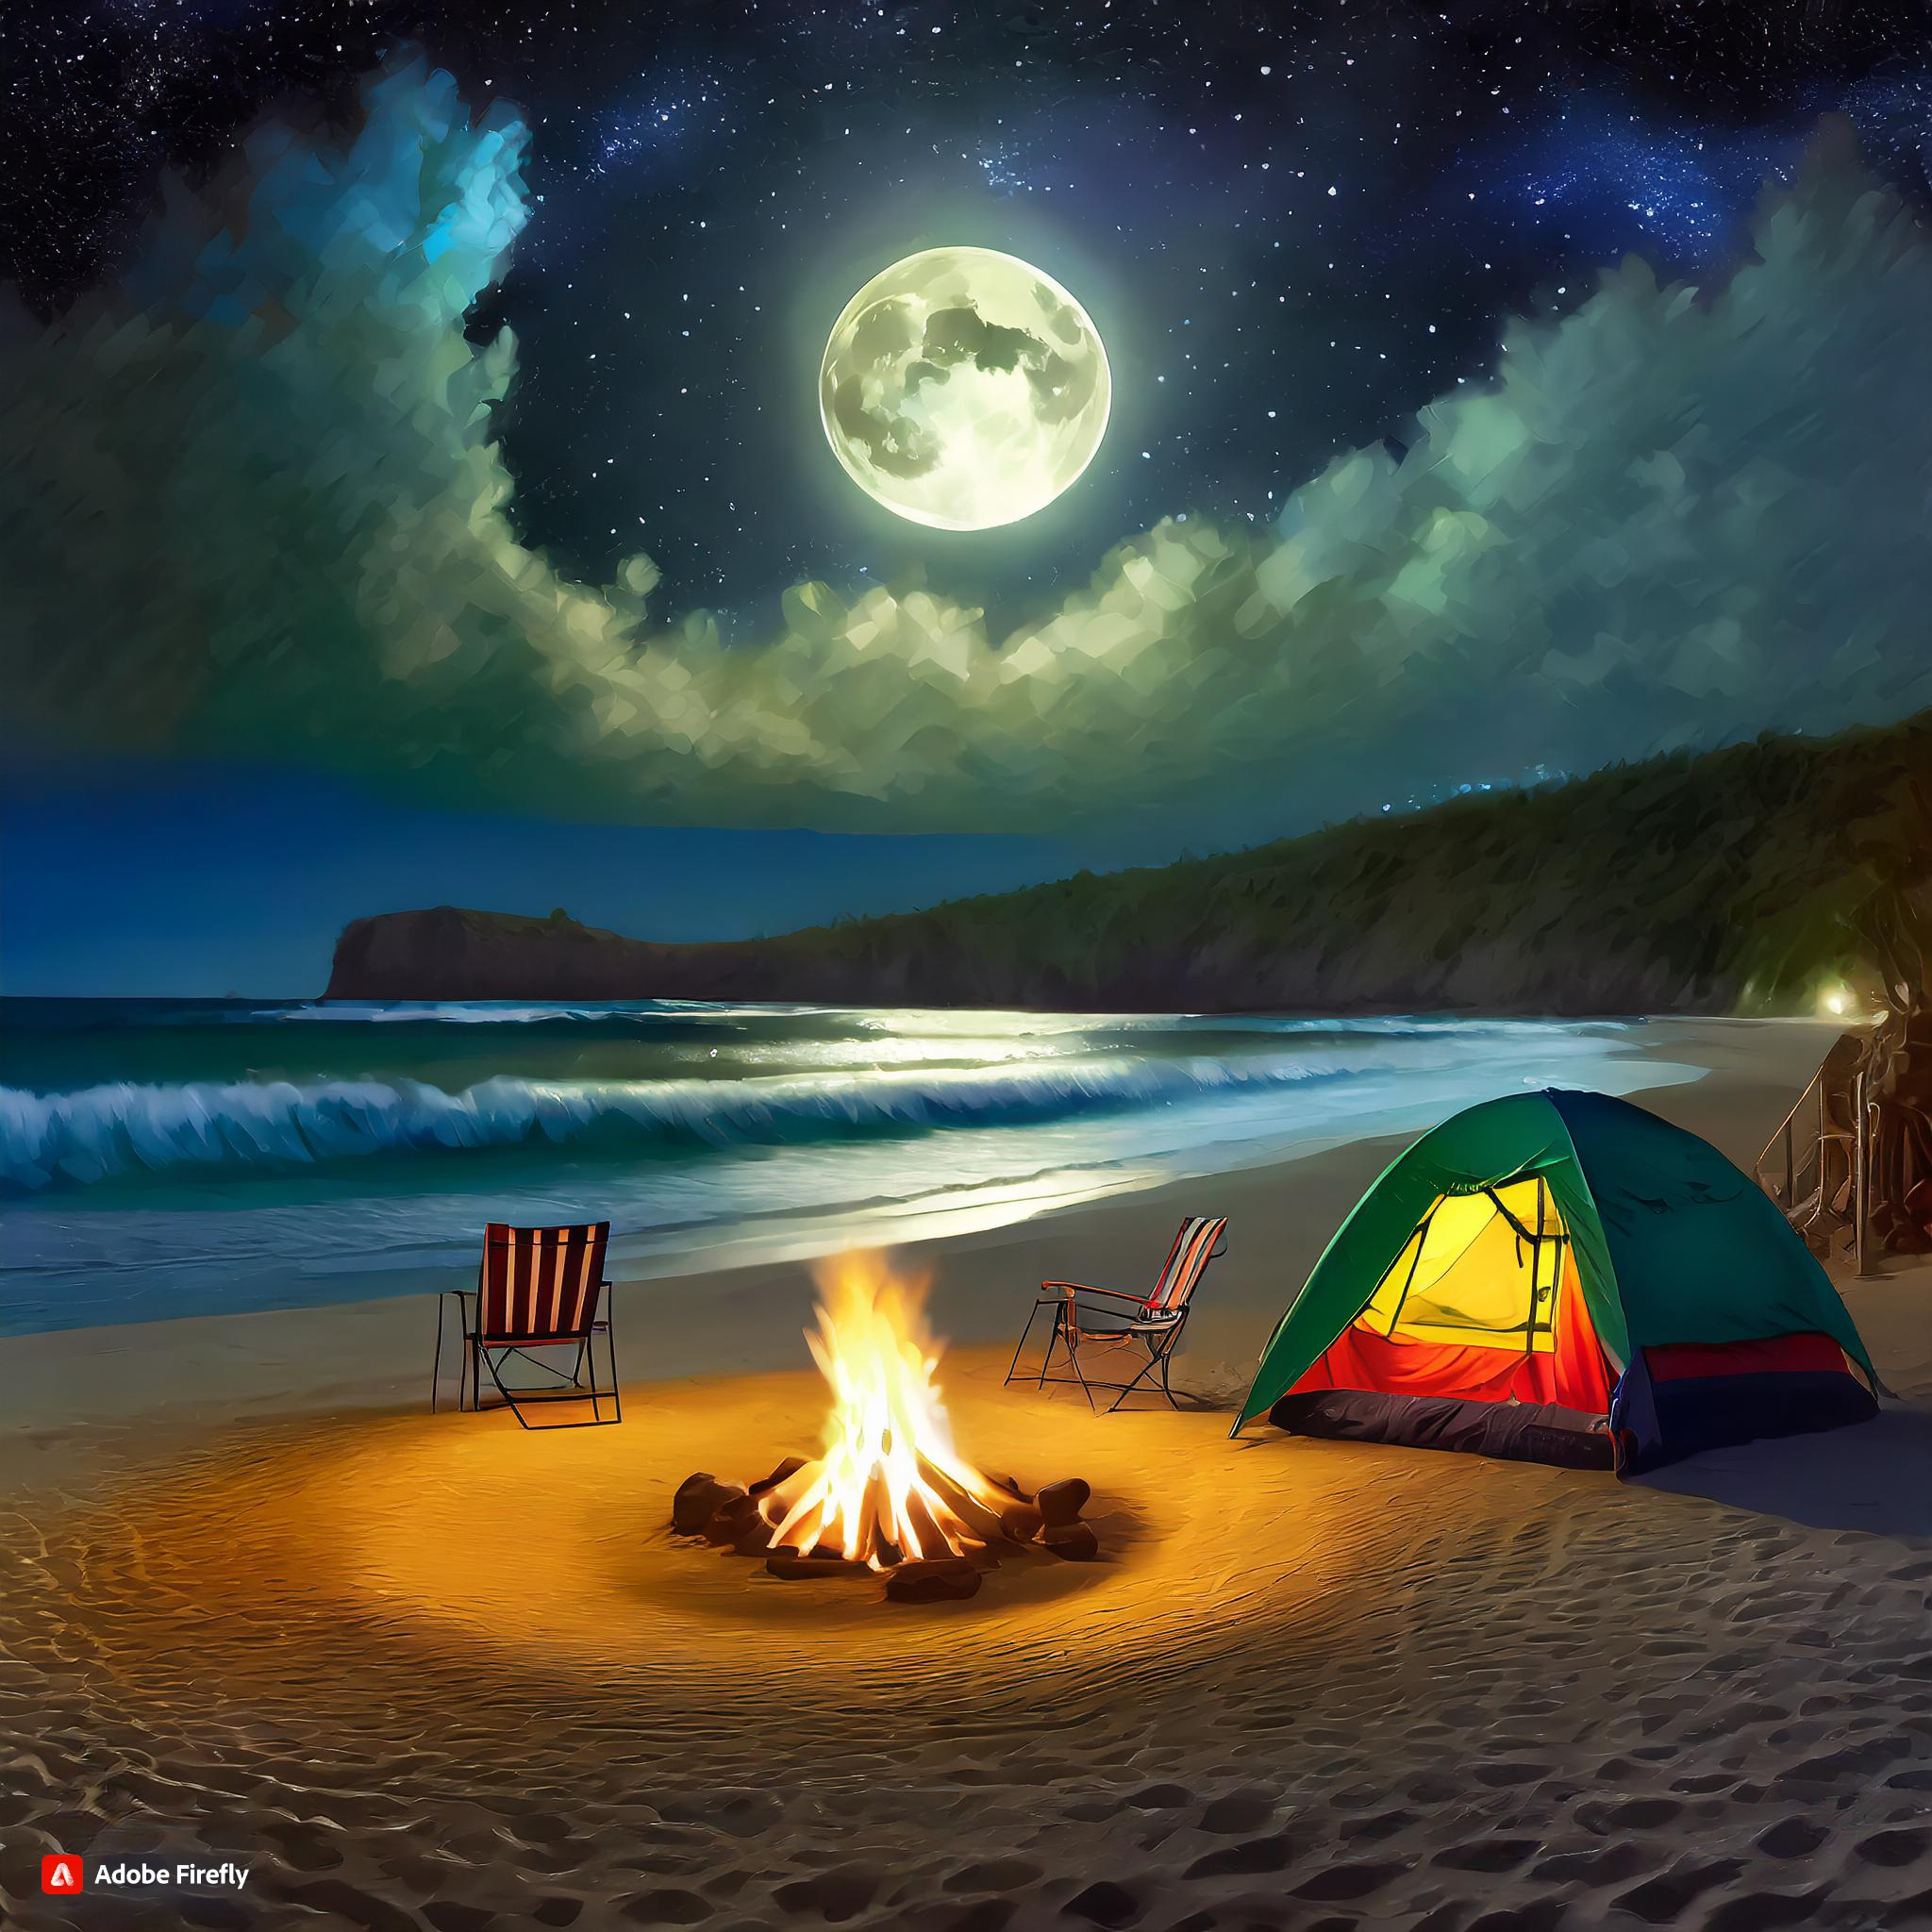  Firefly new port beach, beautiful fluorescent waves, big glowing moon, surreal night sky, captivatin.jpg